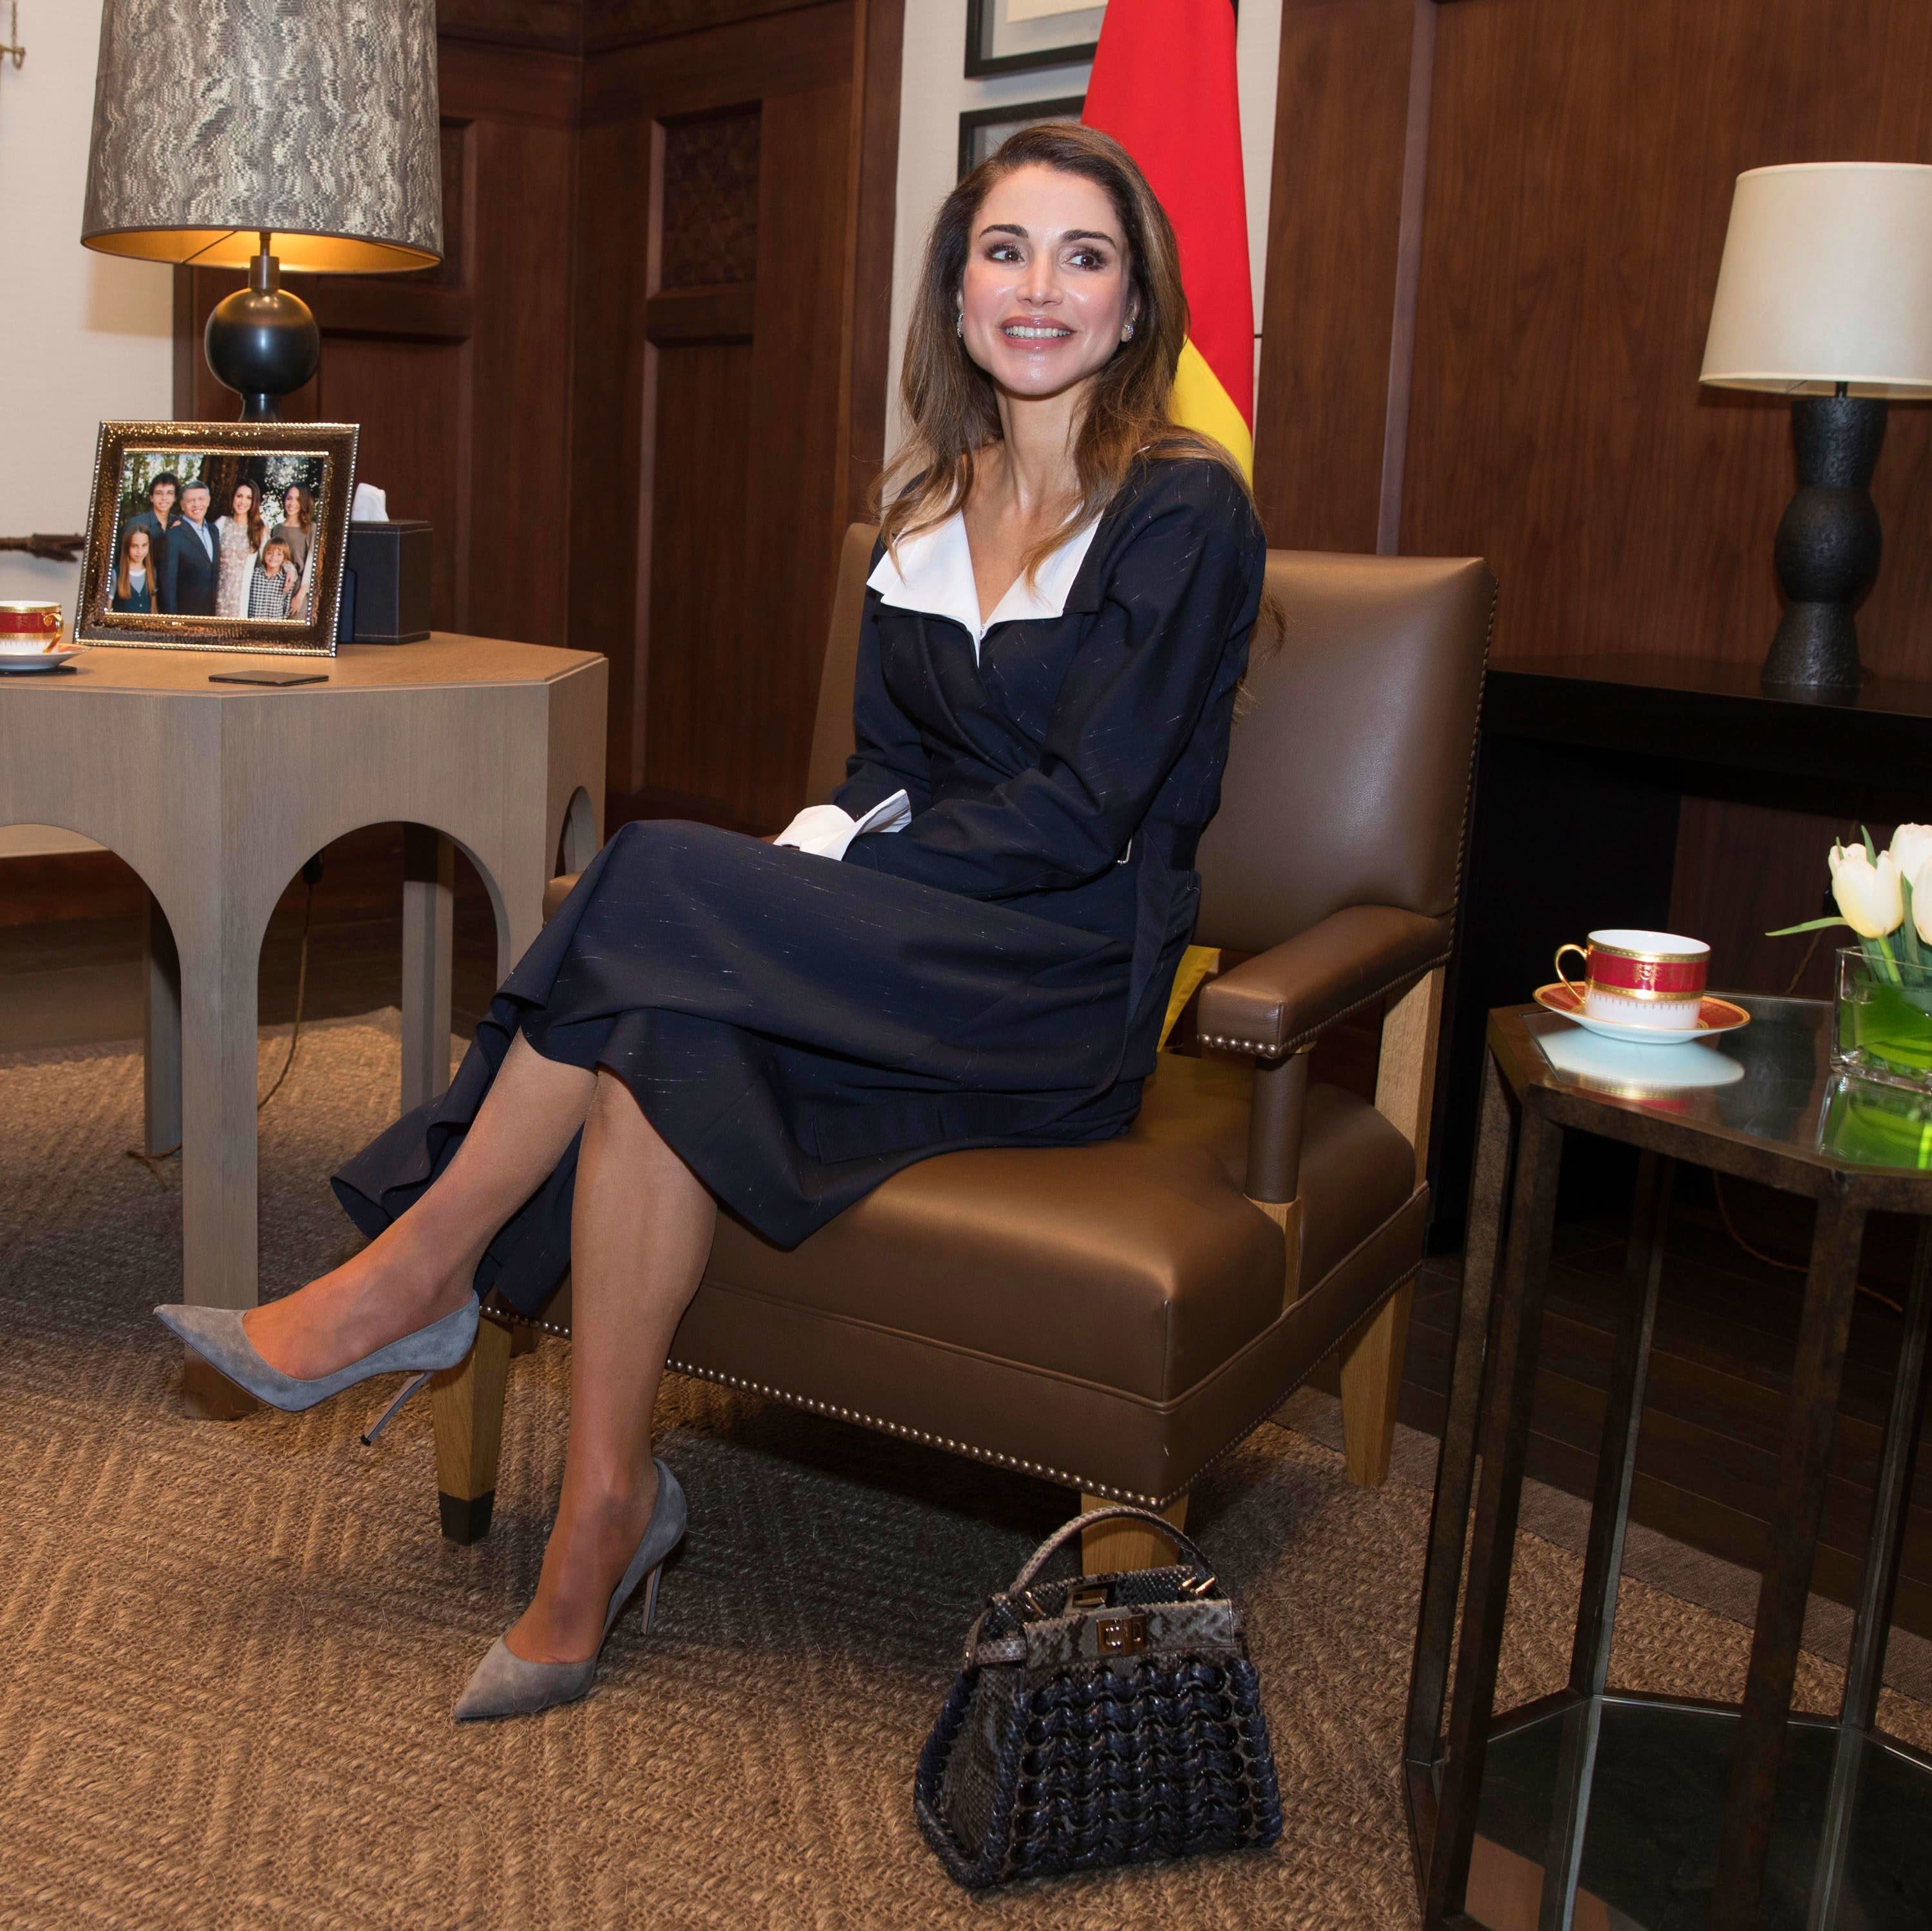 Queen Rania Of Jordan Takes The Coatdress Into Royal Territory